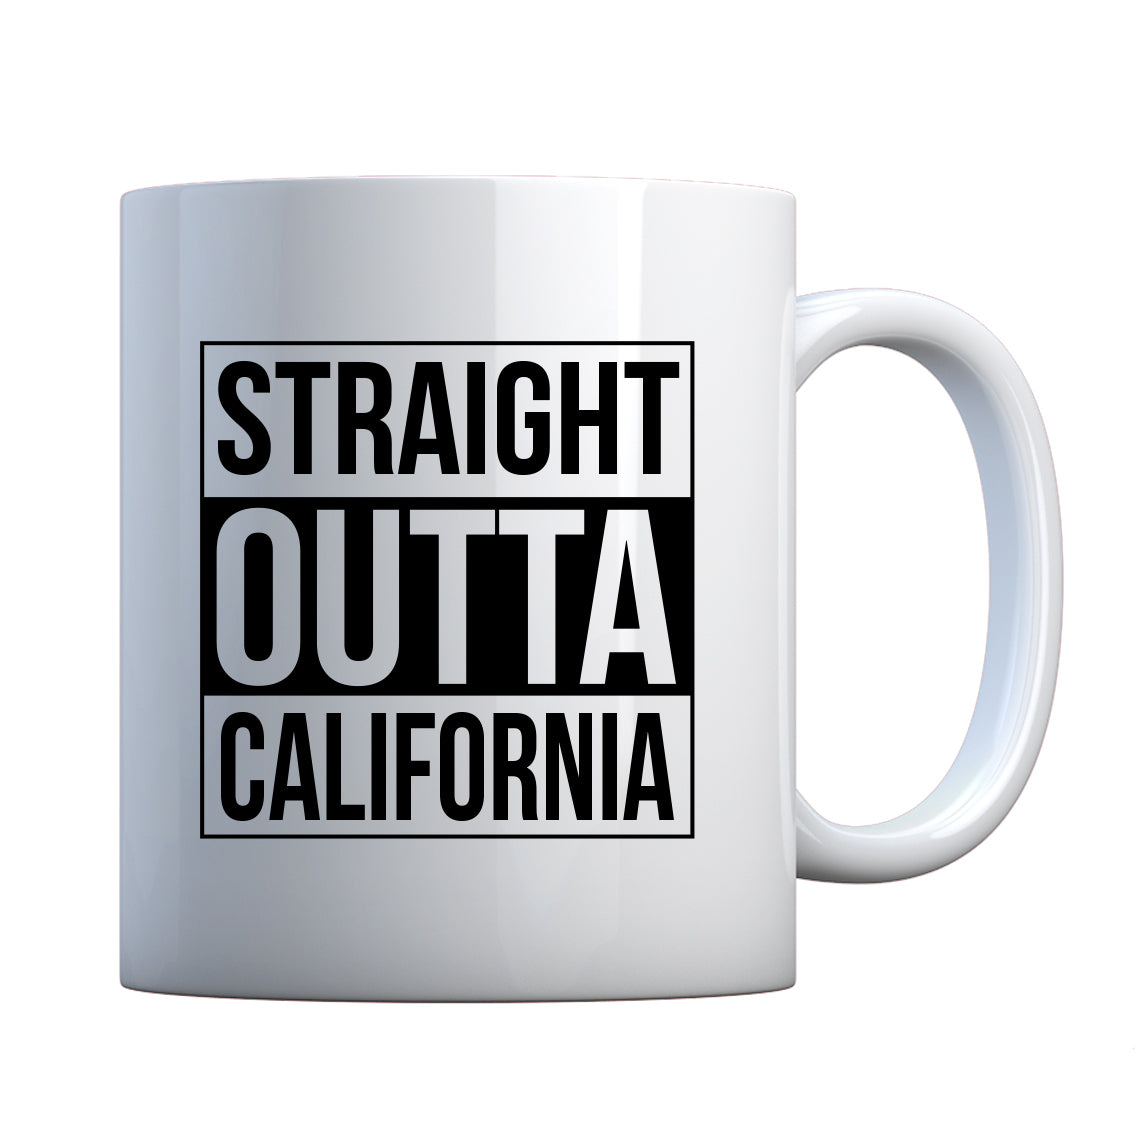 Straight Outta California Ceramic Gift Mug